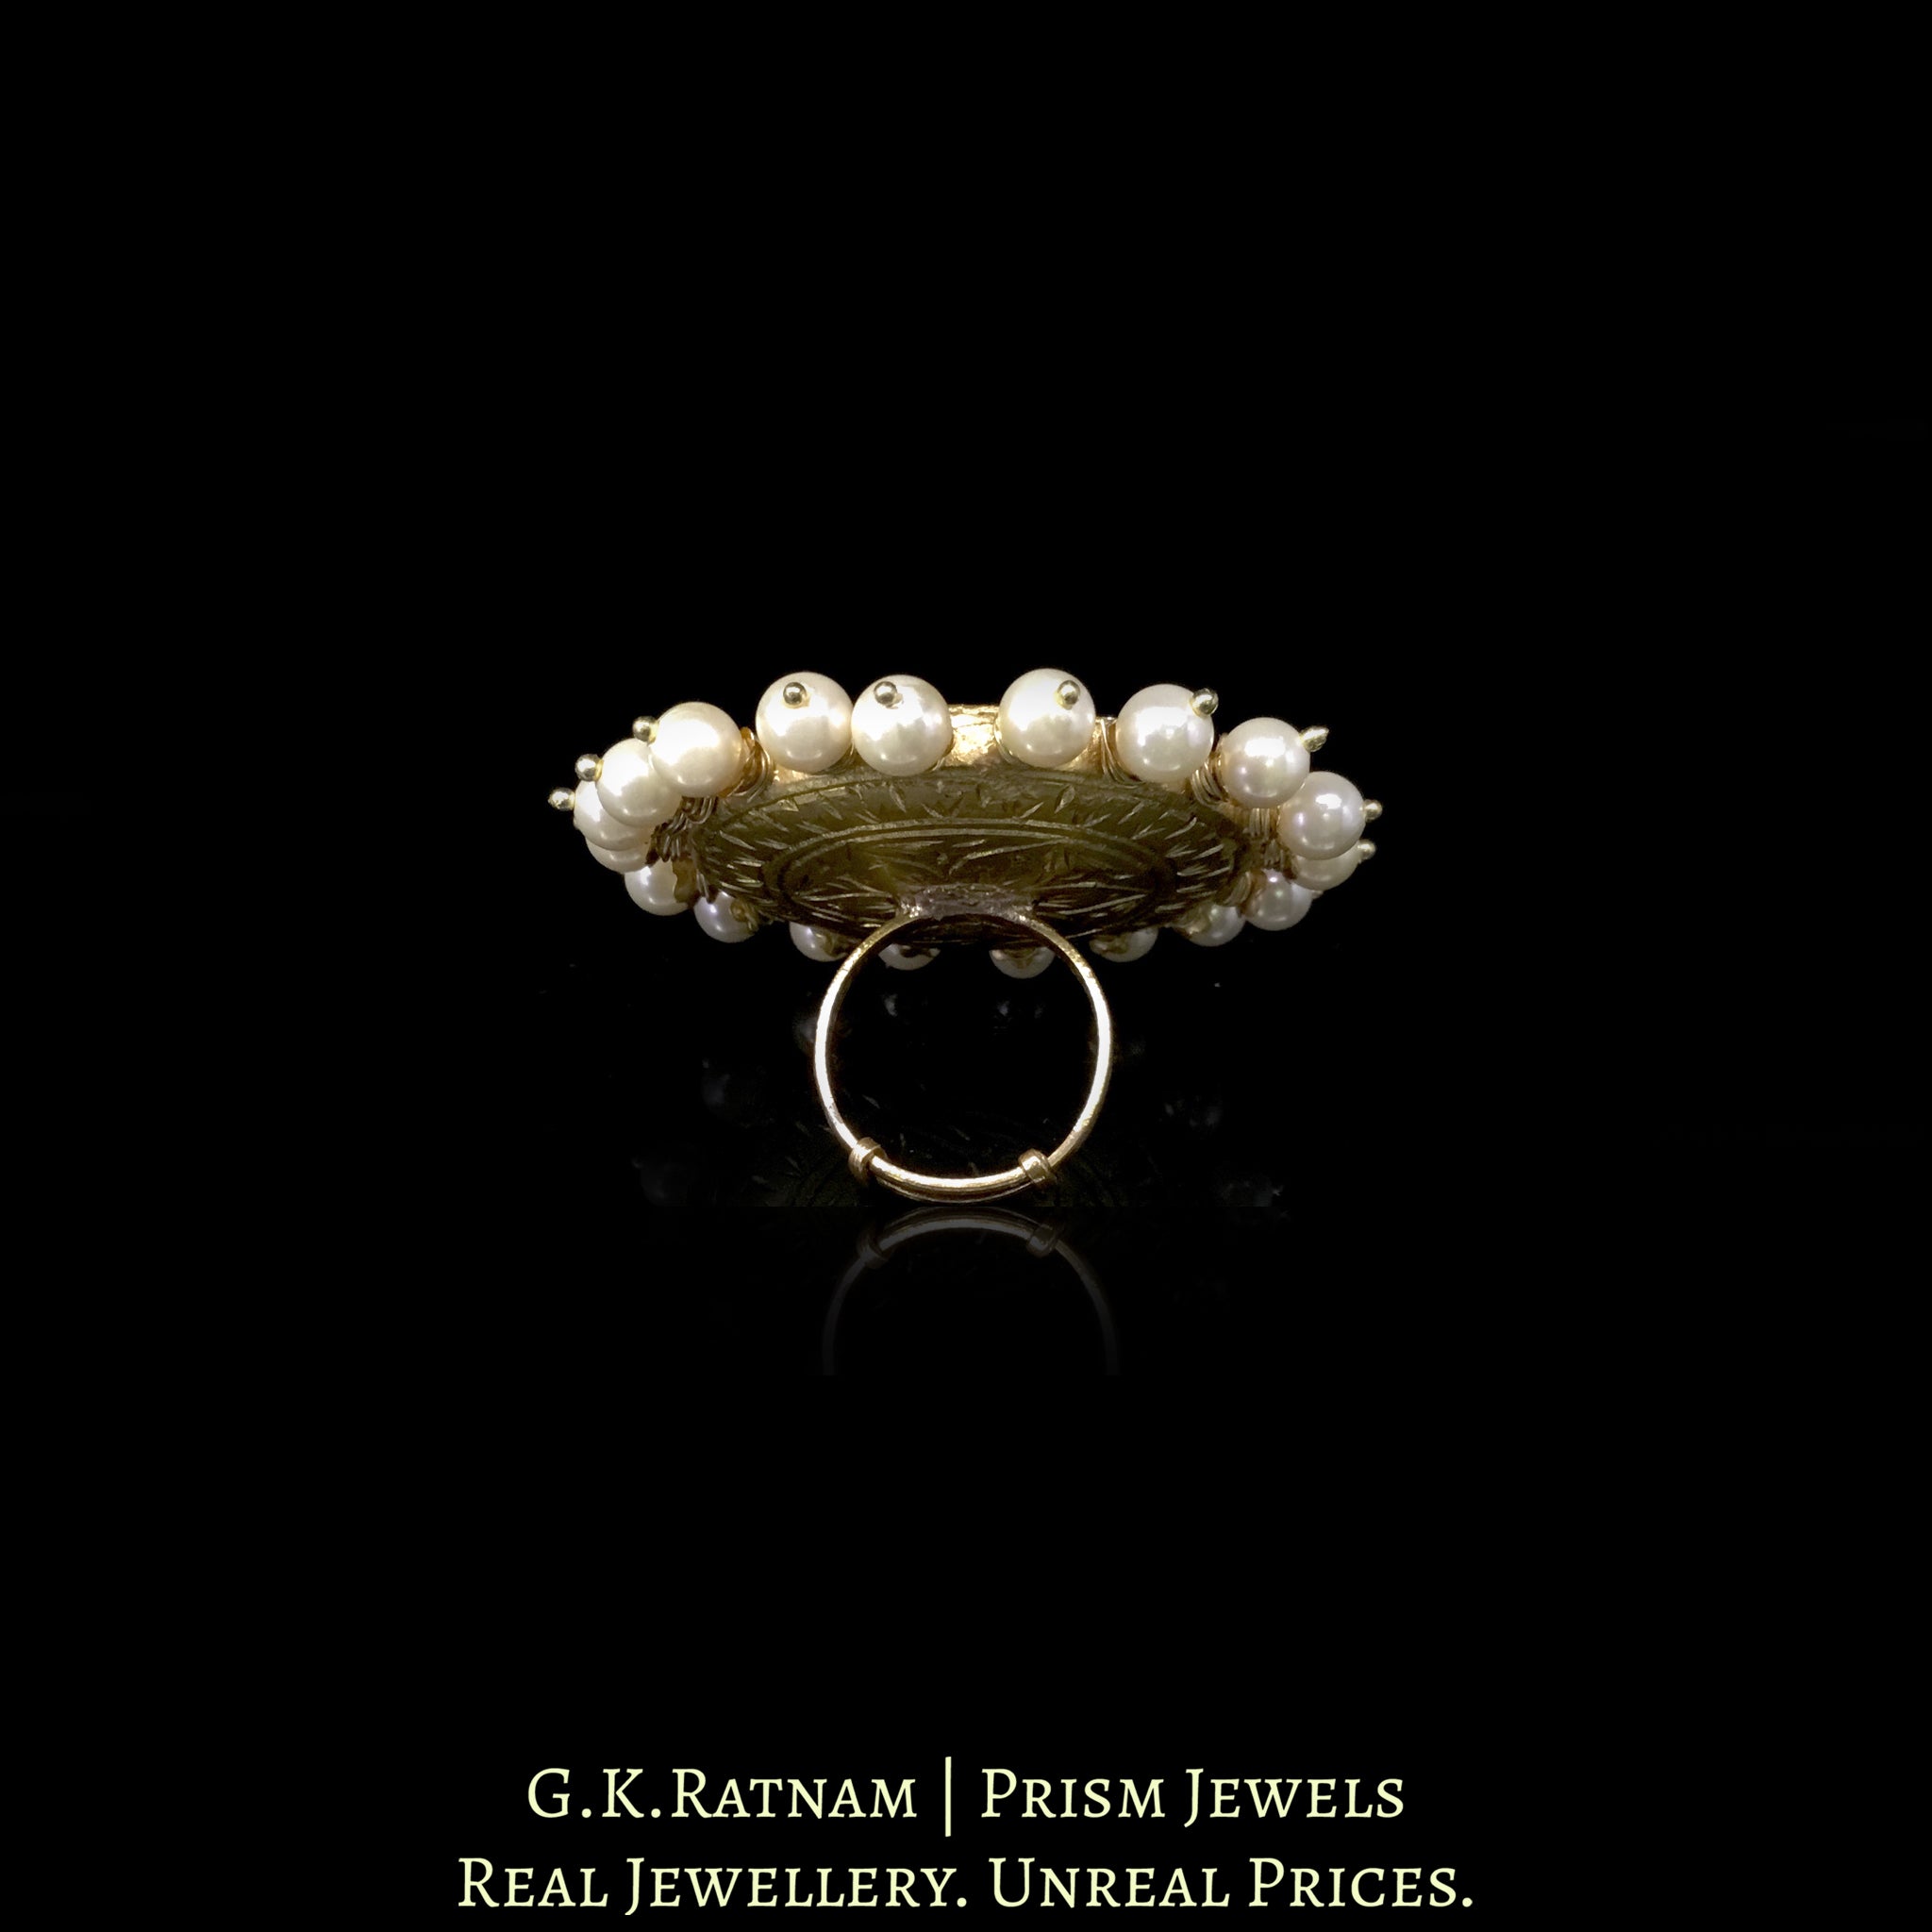 23k Gold and Diamond Polki Navratna Ring with Pearl Spikes